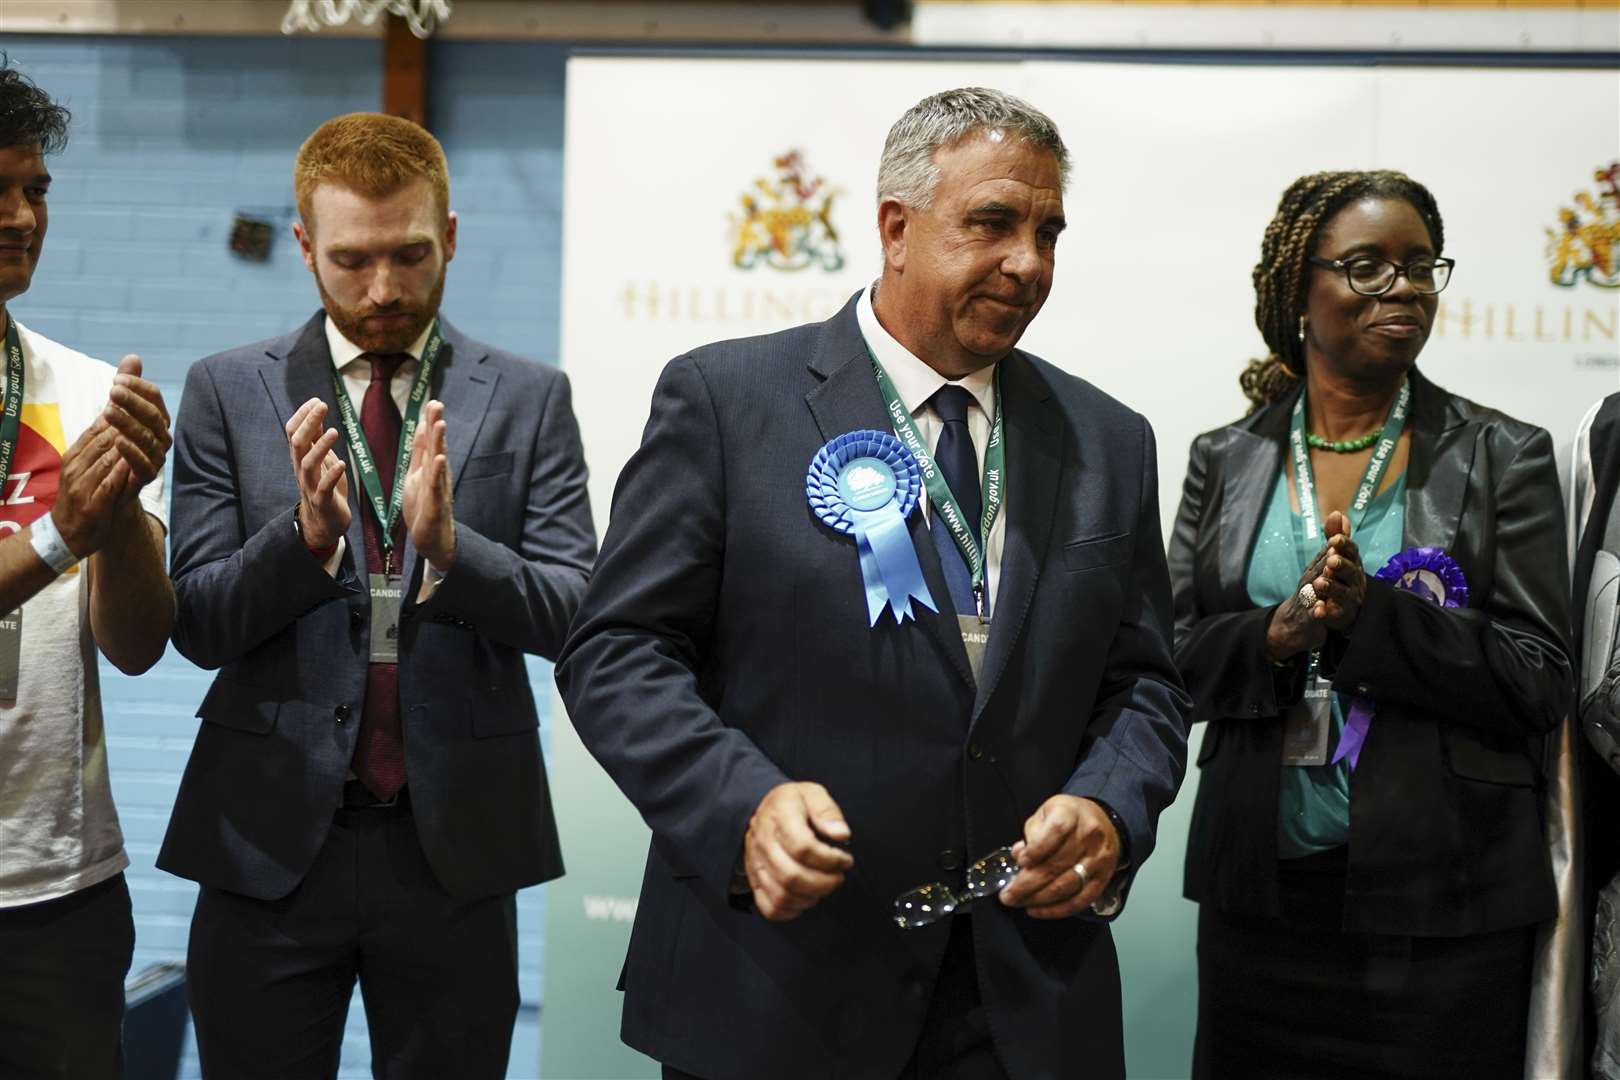 New Uxbridge MP Steve Tuckwell treated the by-election like a referendum on the Ulez expansion (Jordan Pettitt/PA)